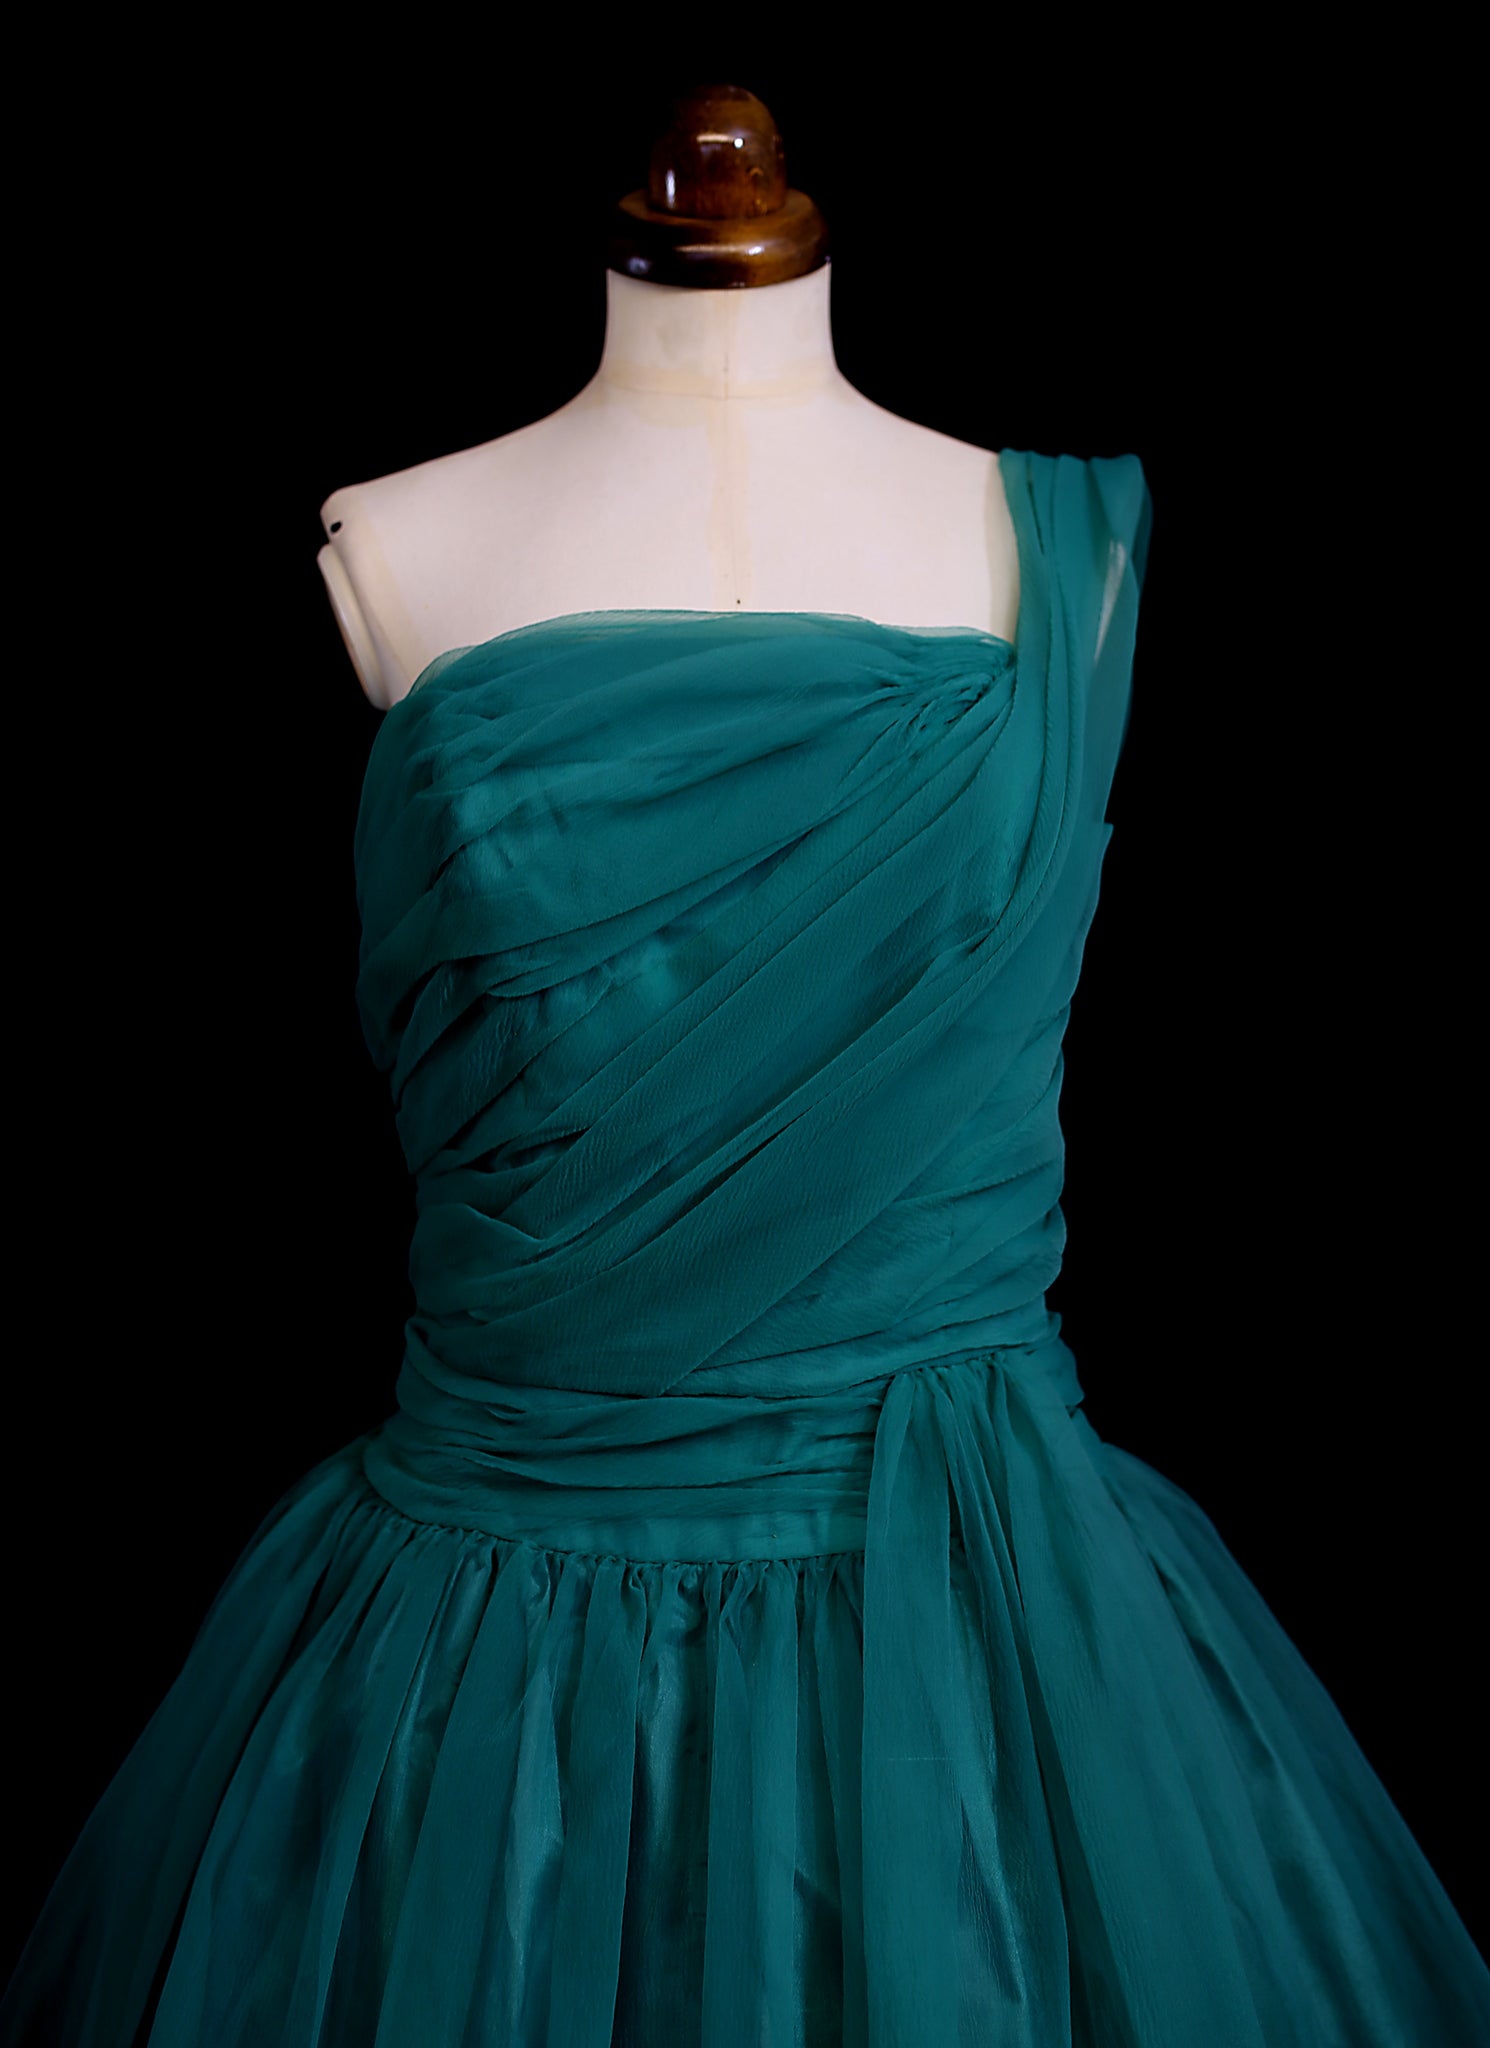 emerald green 1950s cocktail dress vintage tea length